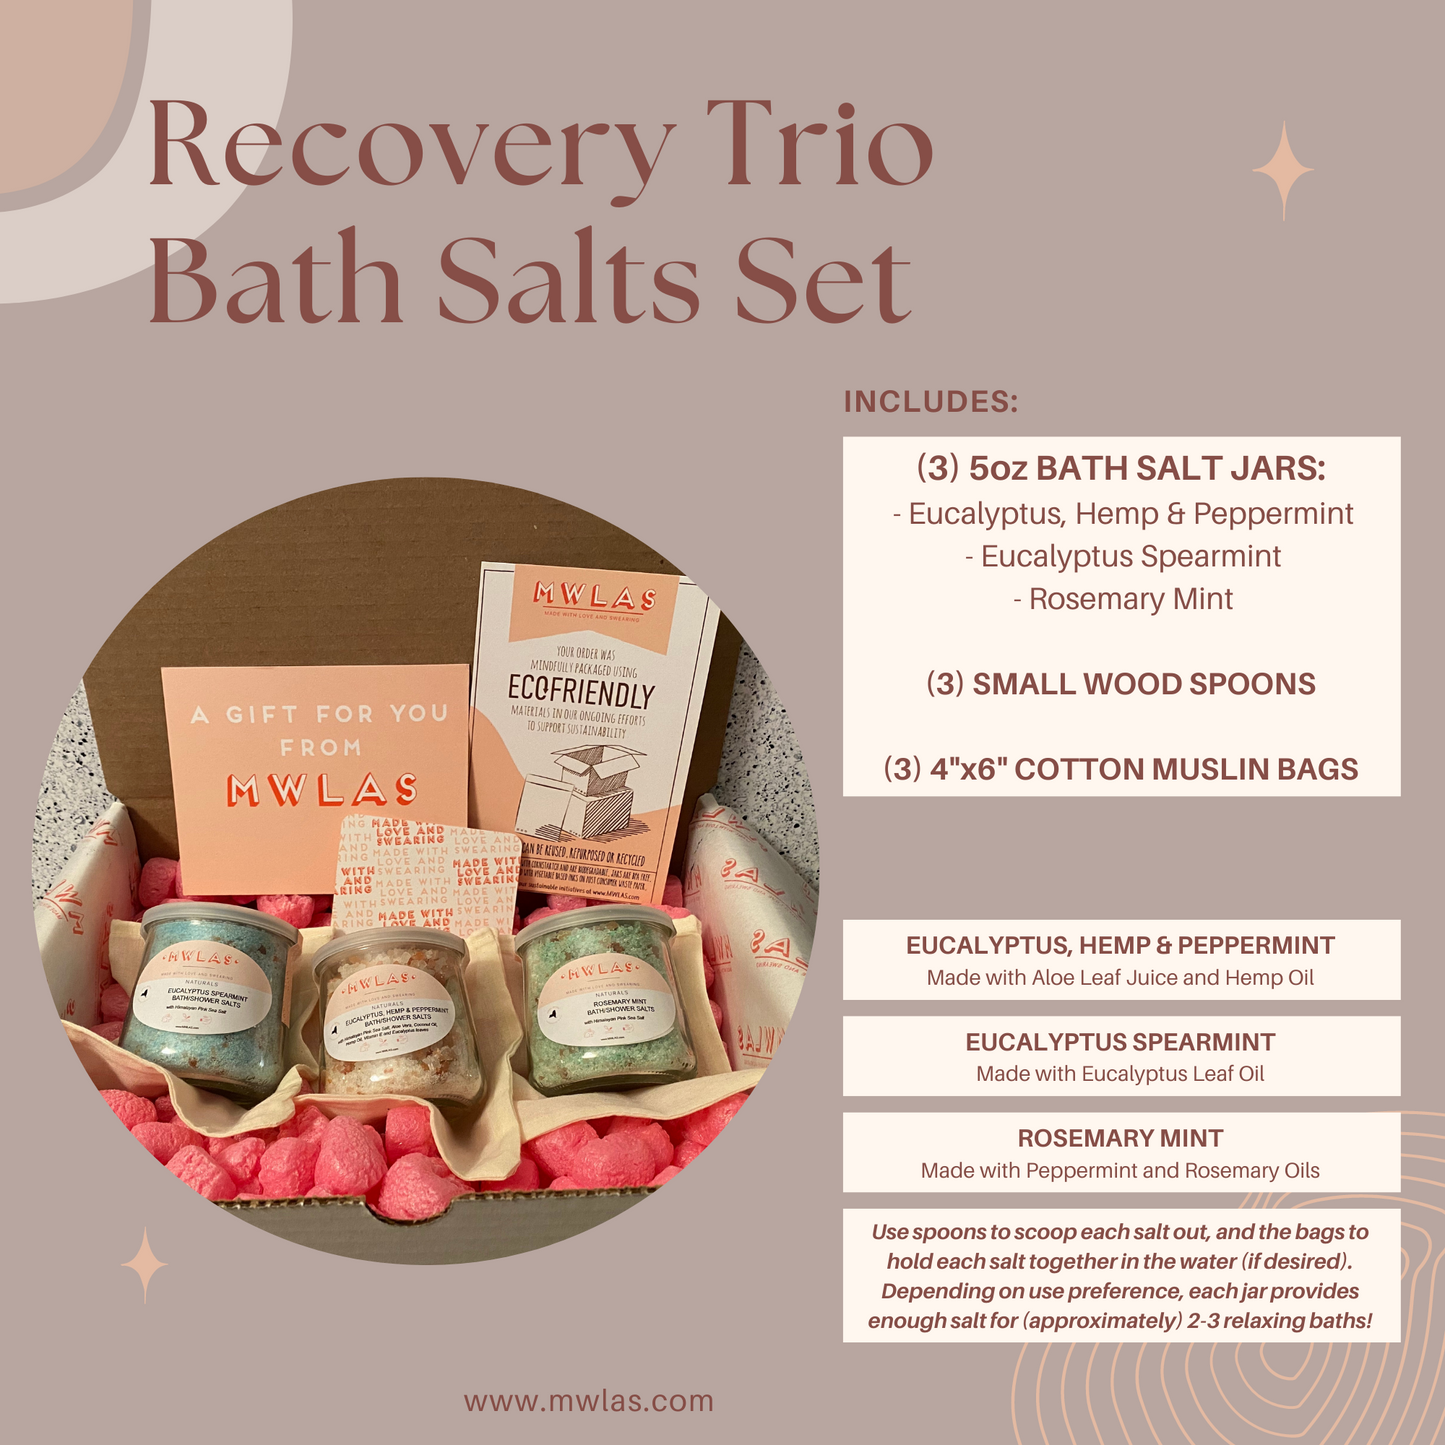 Recovery Trio Bath Salts Set